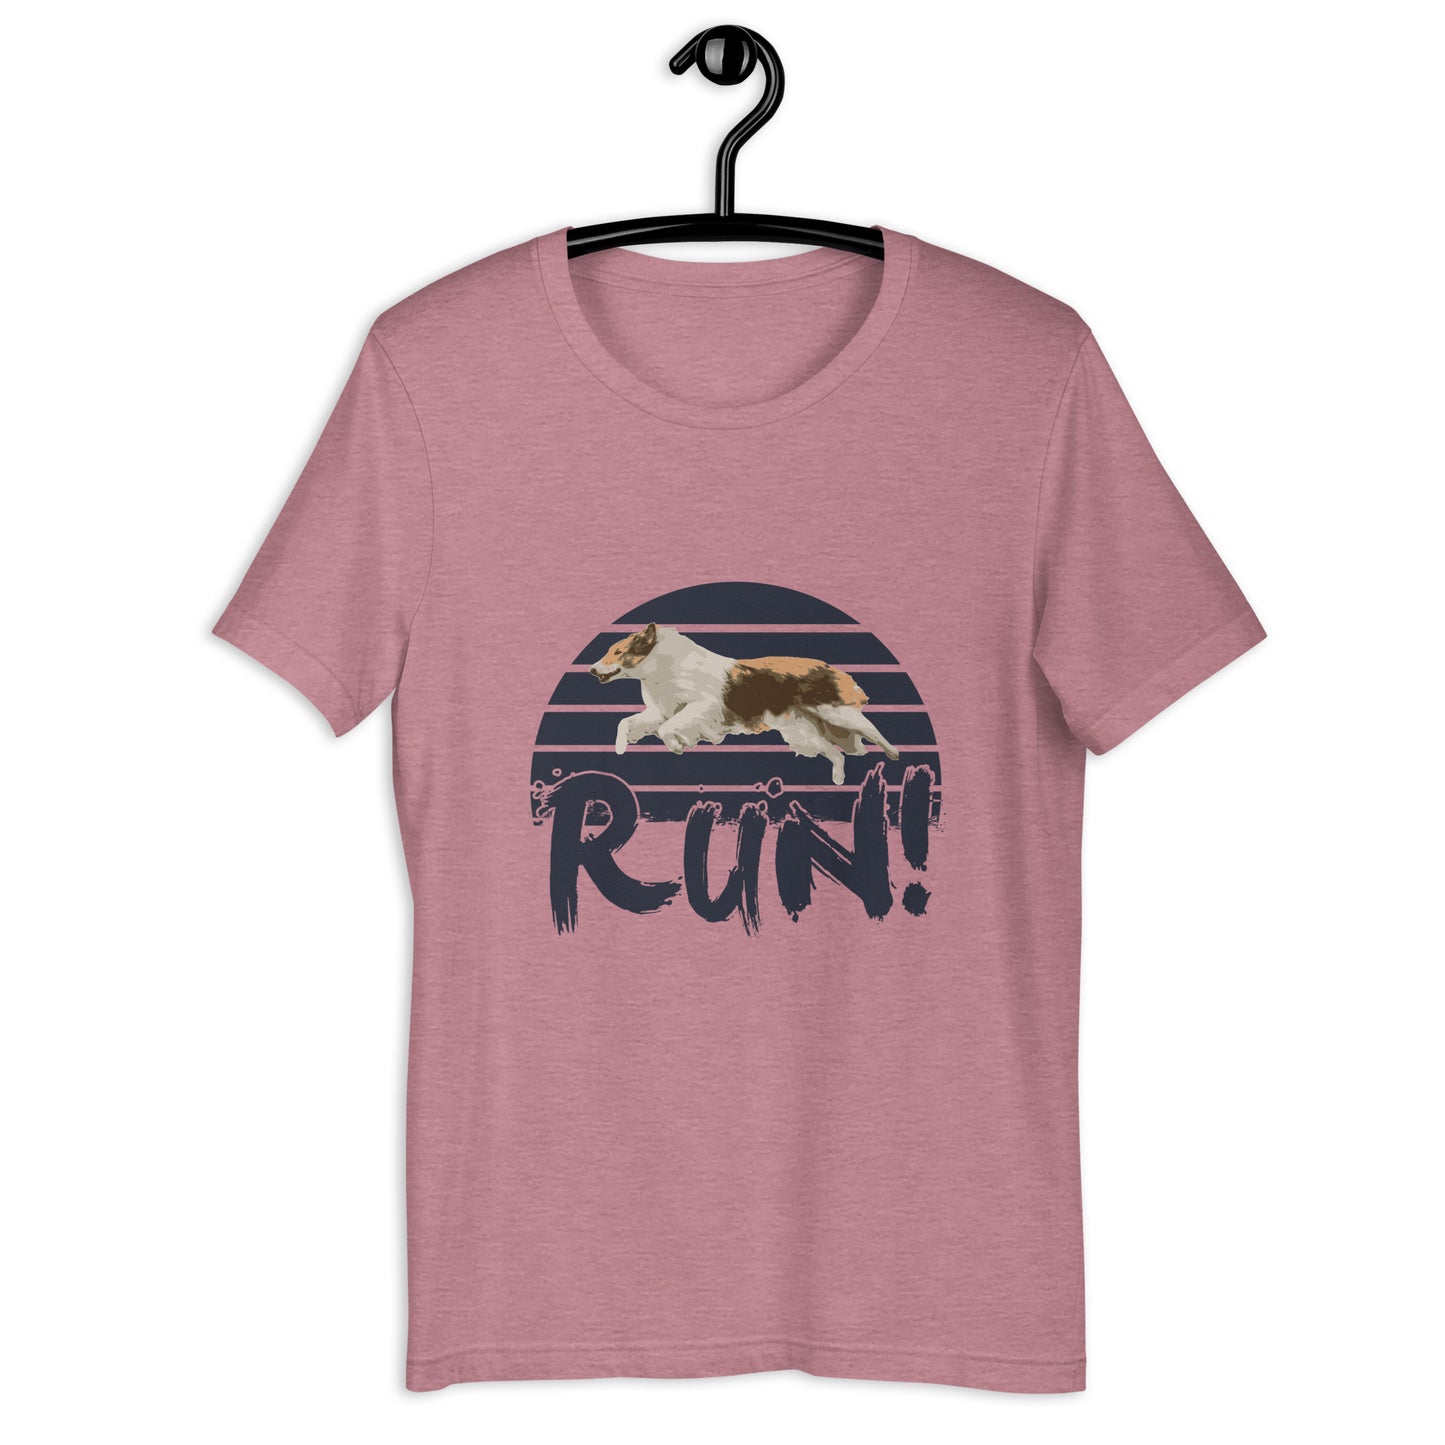 RUN! - COLLIE - Unisex t-shirt